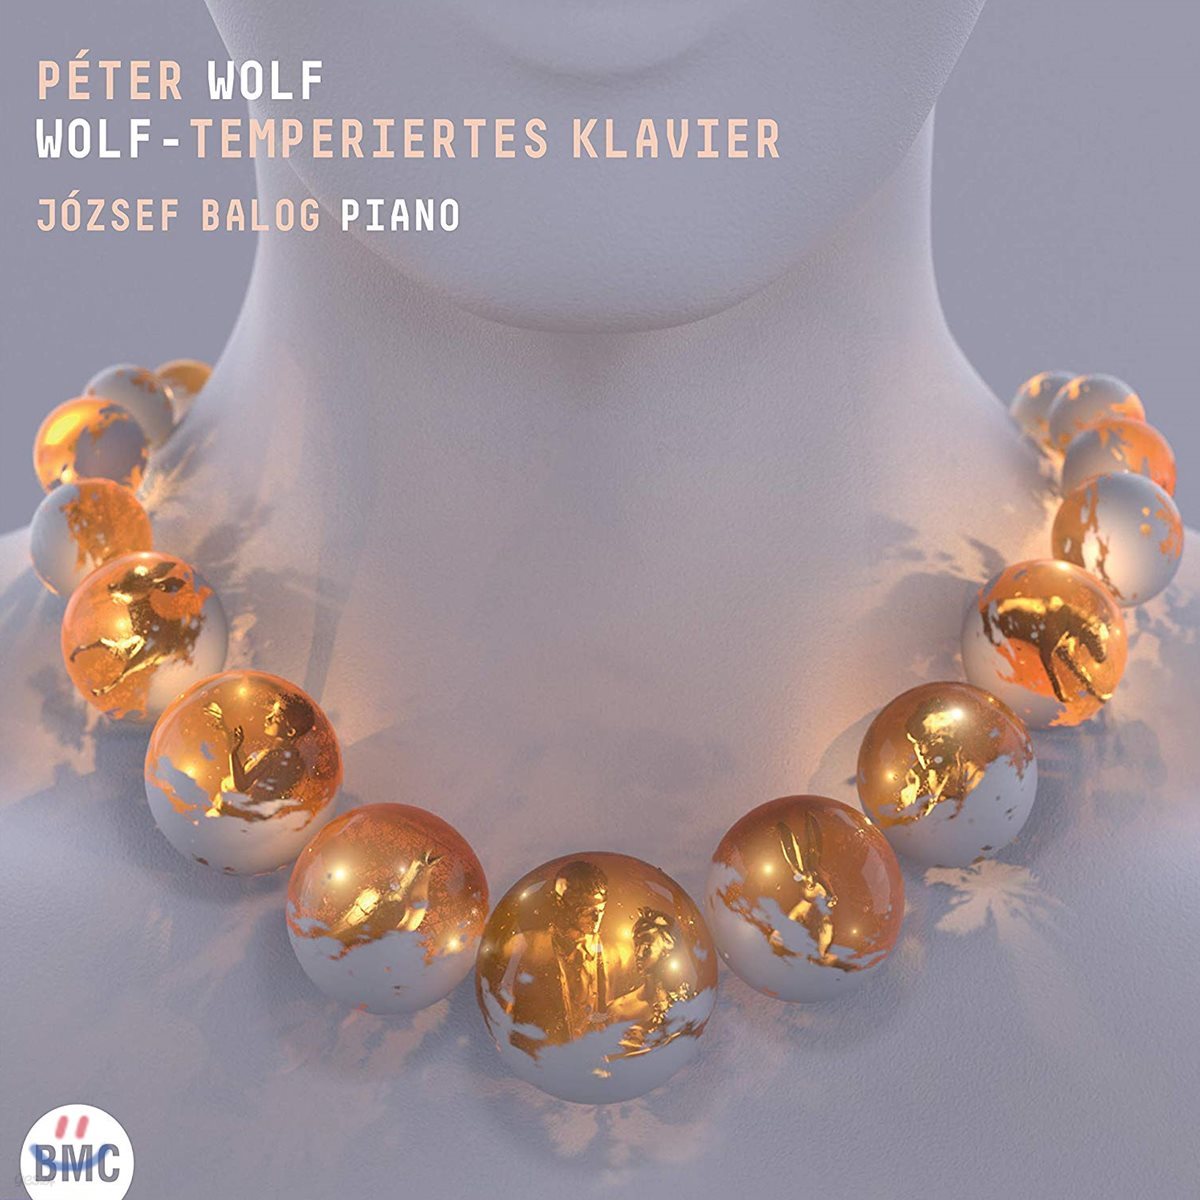 Jozsef Balog 페테르 볼프: 볼프-조율 피아노곡집 (Peter Wolf: Wolf-temperiertes Klavier) [2CD]